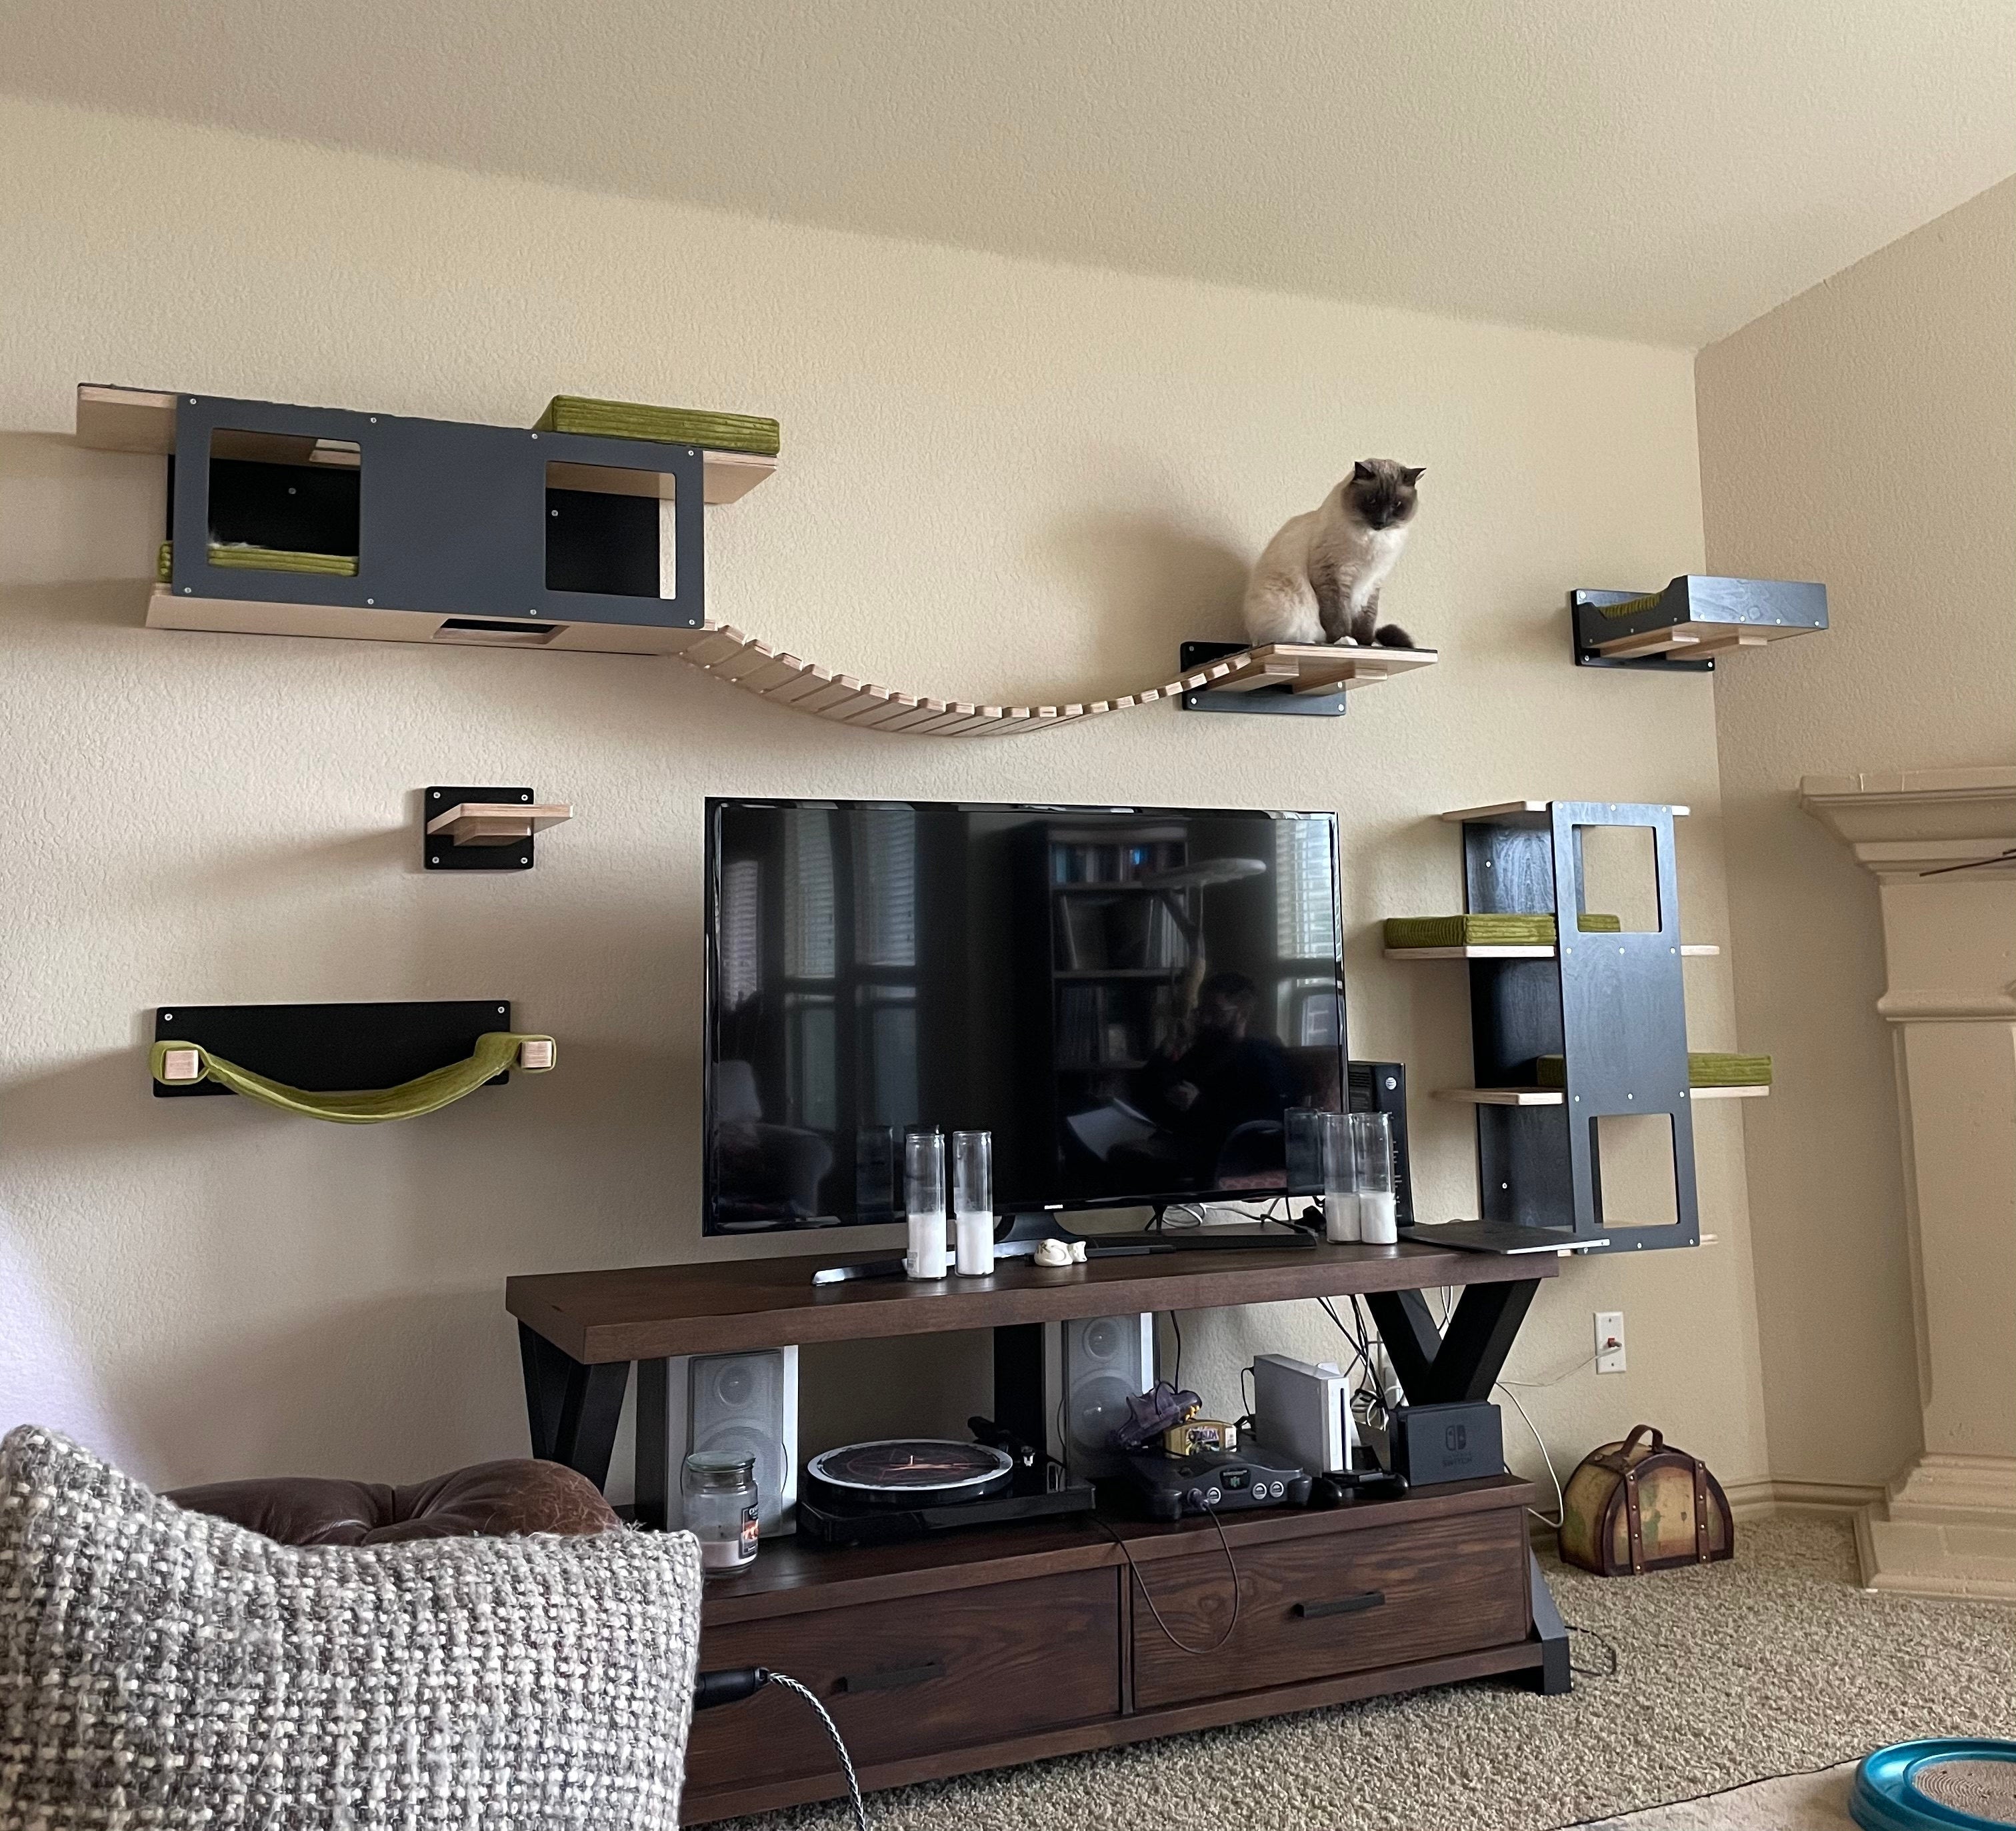 Cat Wall Shelf Bed - Wally Flat Plus - Scratchy Things Premium Pet Furniture